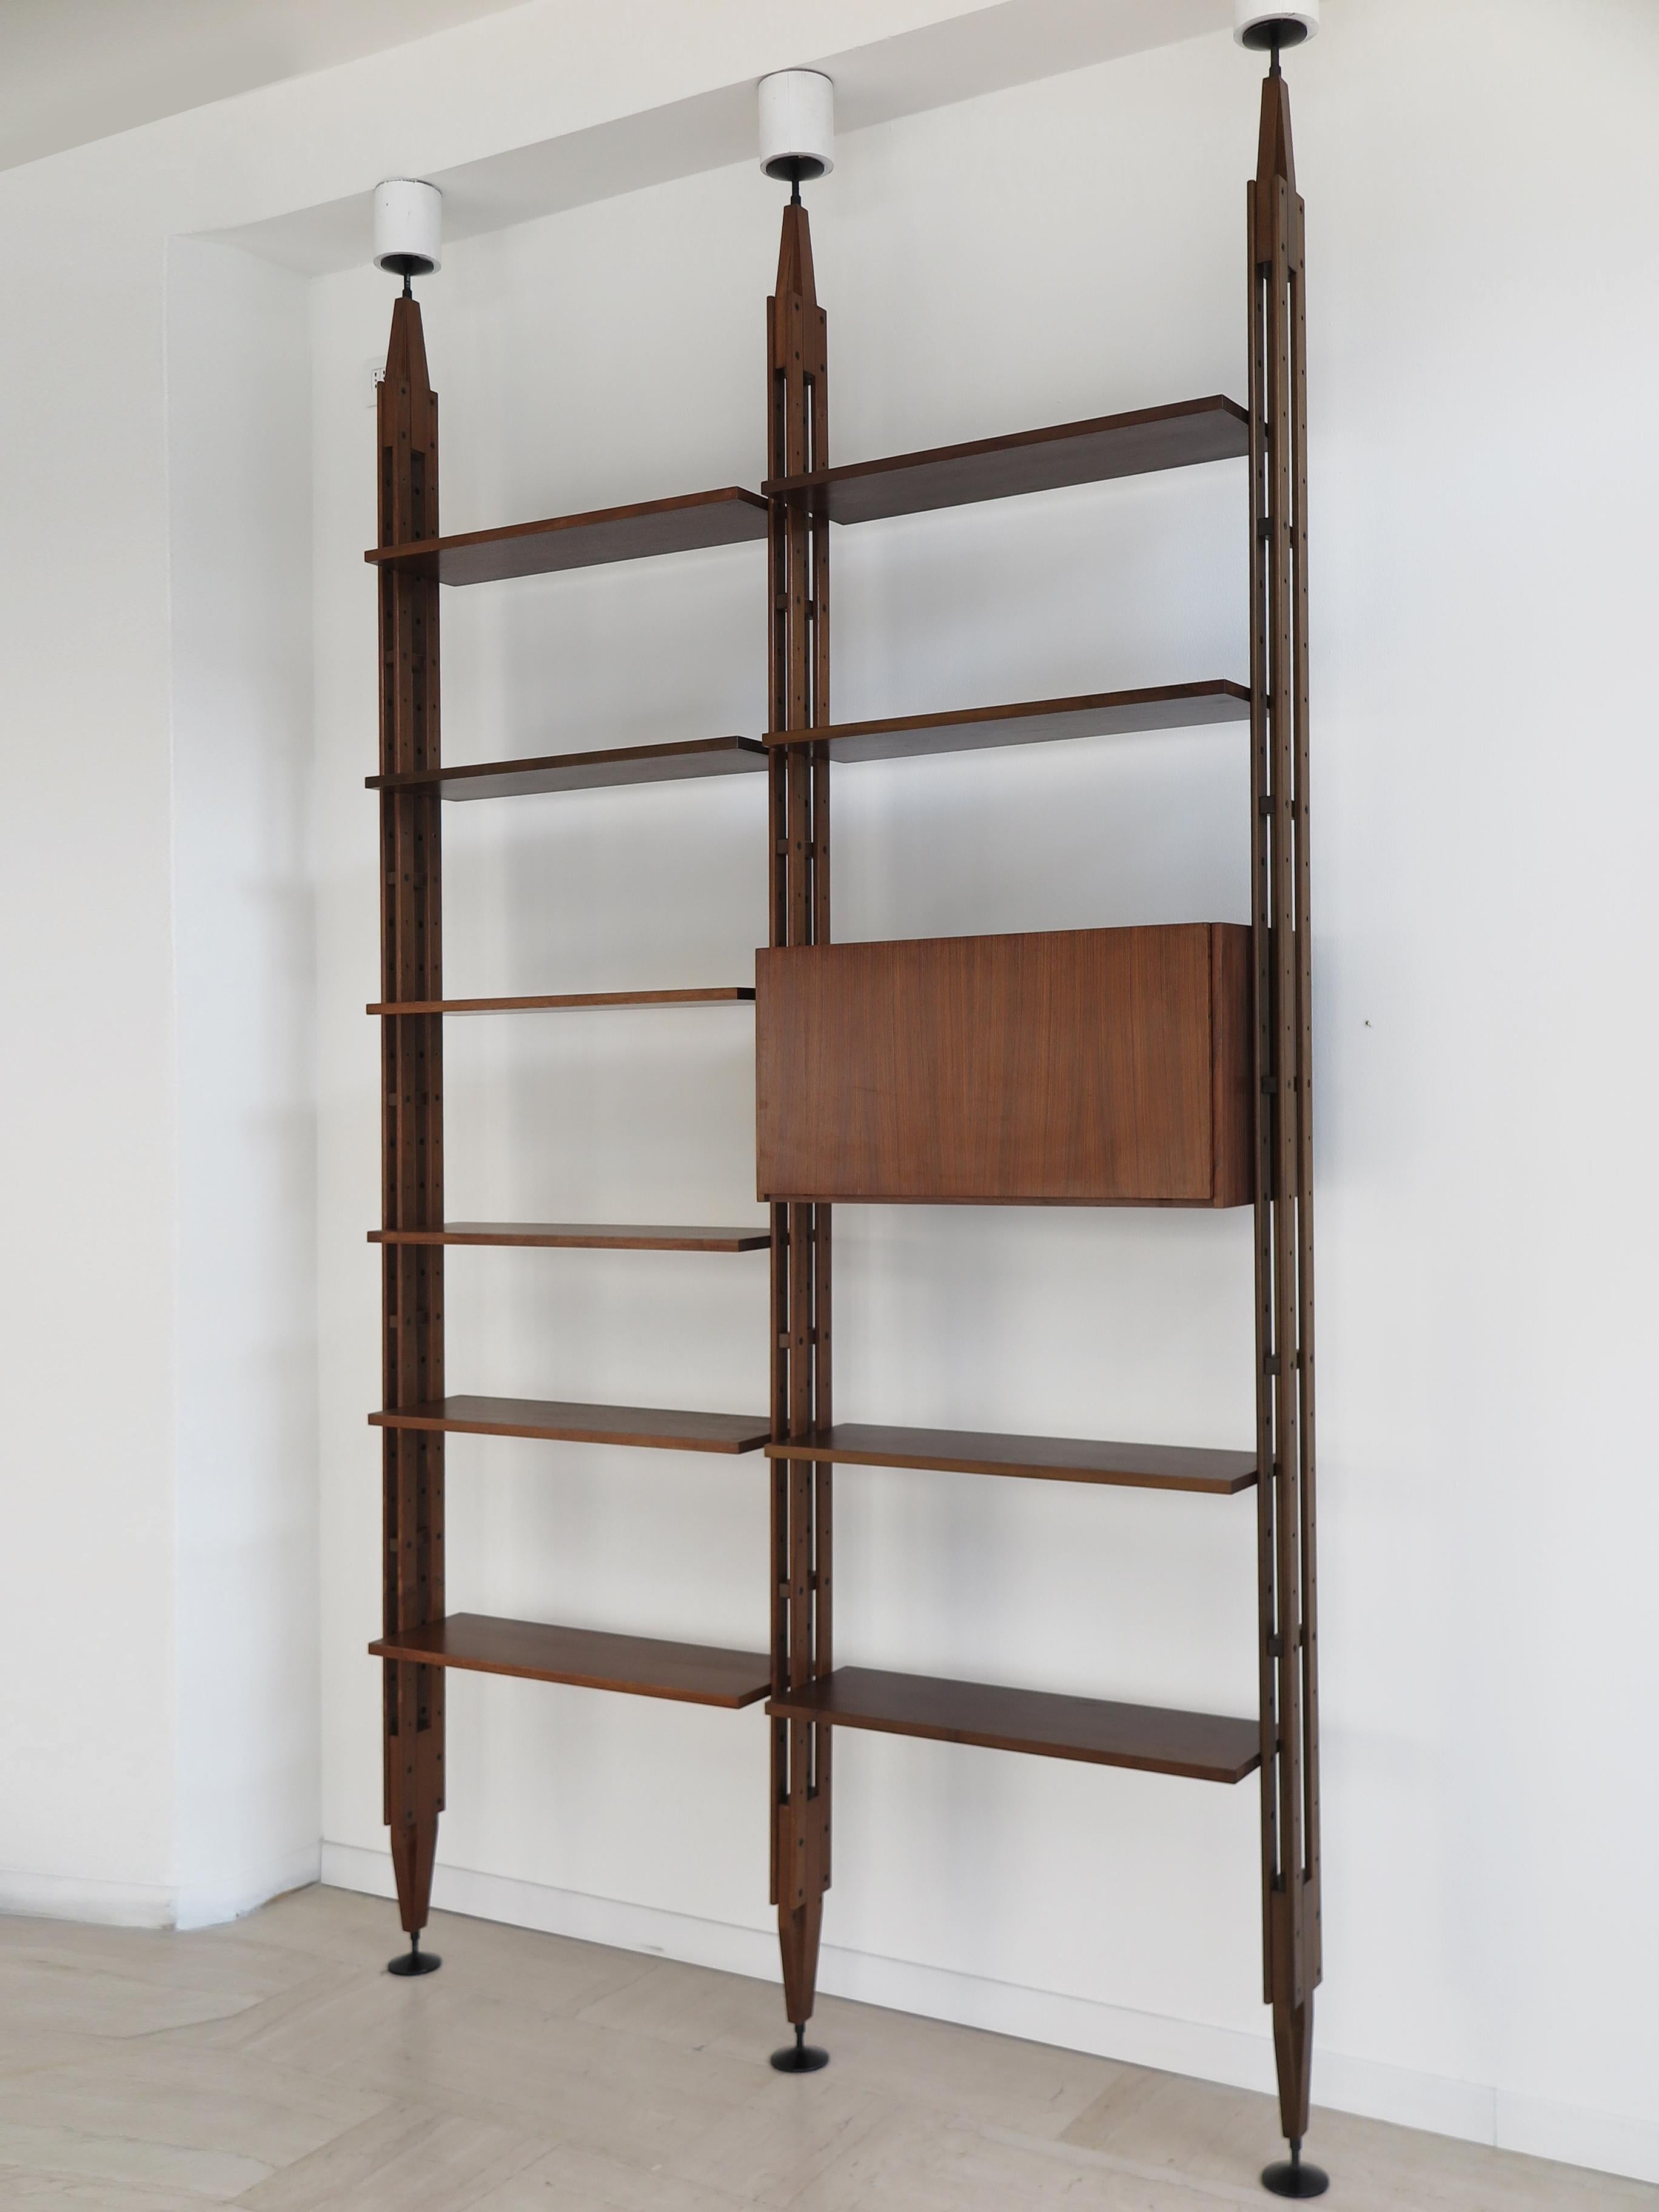 Veneer Franco Albini Italian Midcentury Wood Bookcase Lb7 for Poggi, 1950s